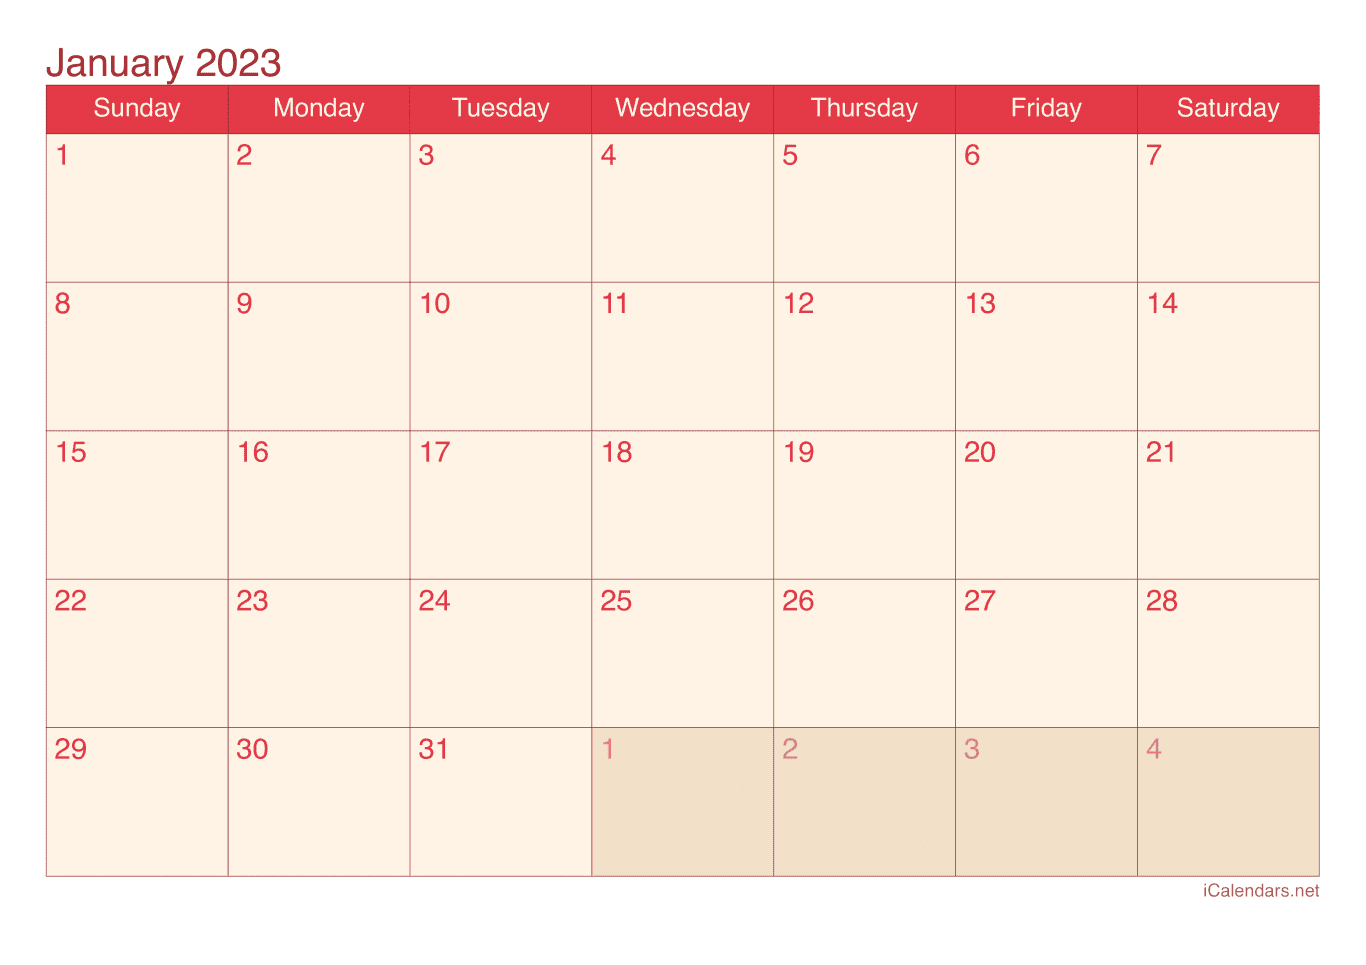 2023 Monthly Calendar - Cherry